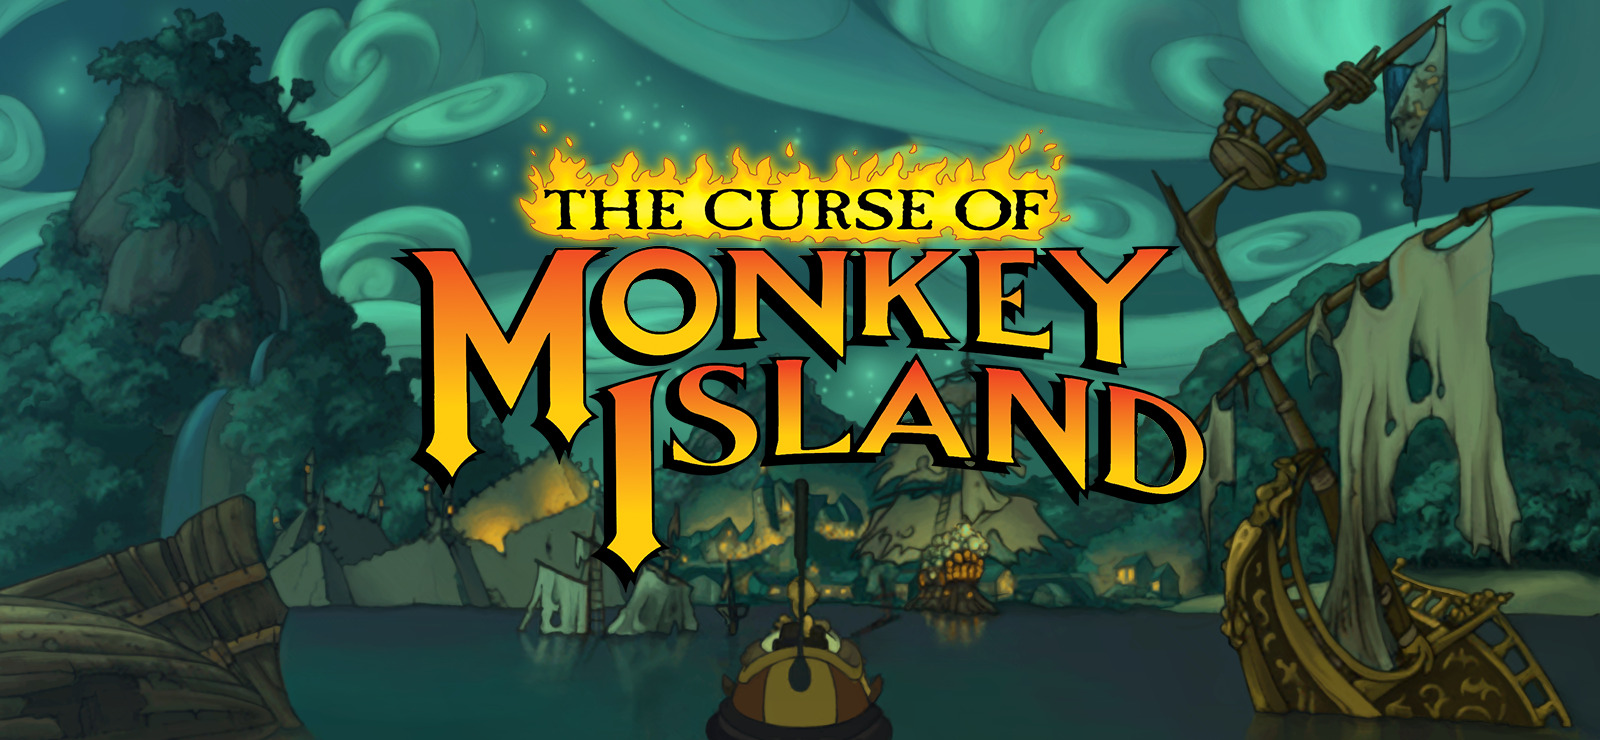 return to monkey island gameplay download free